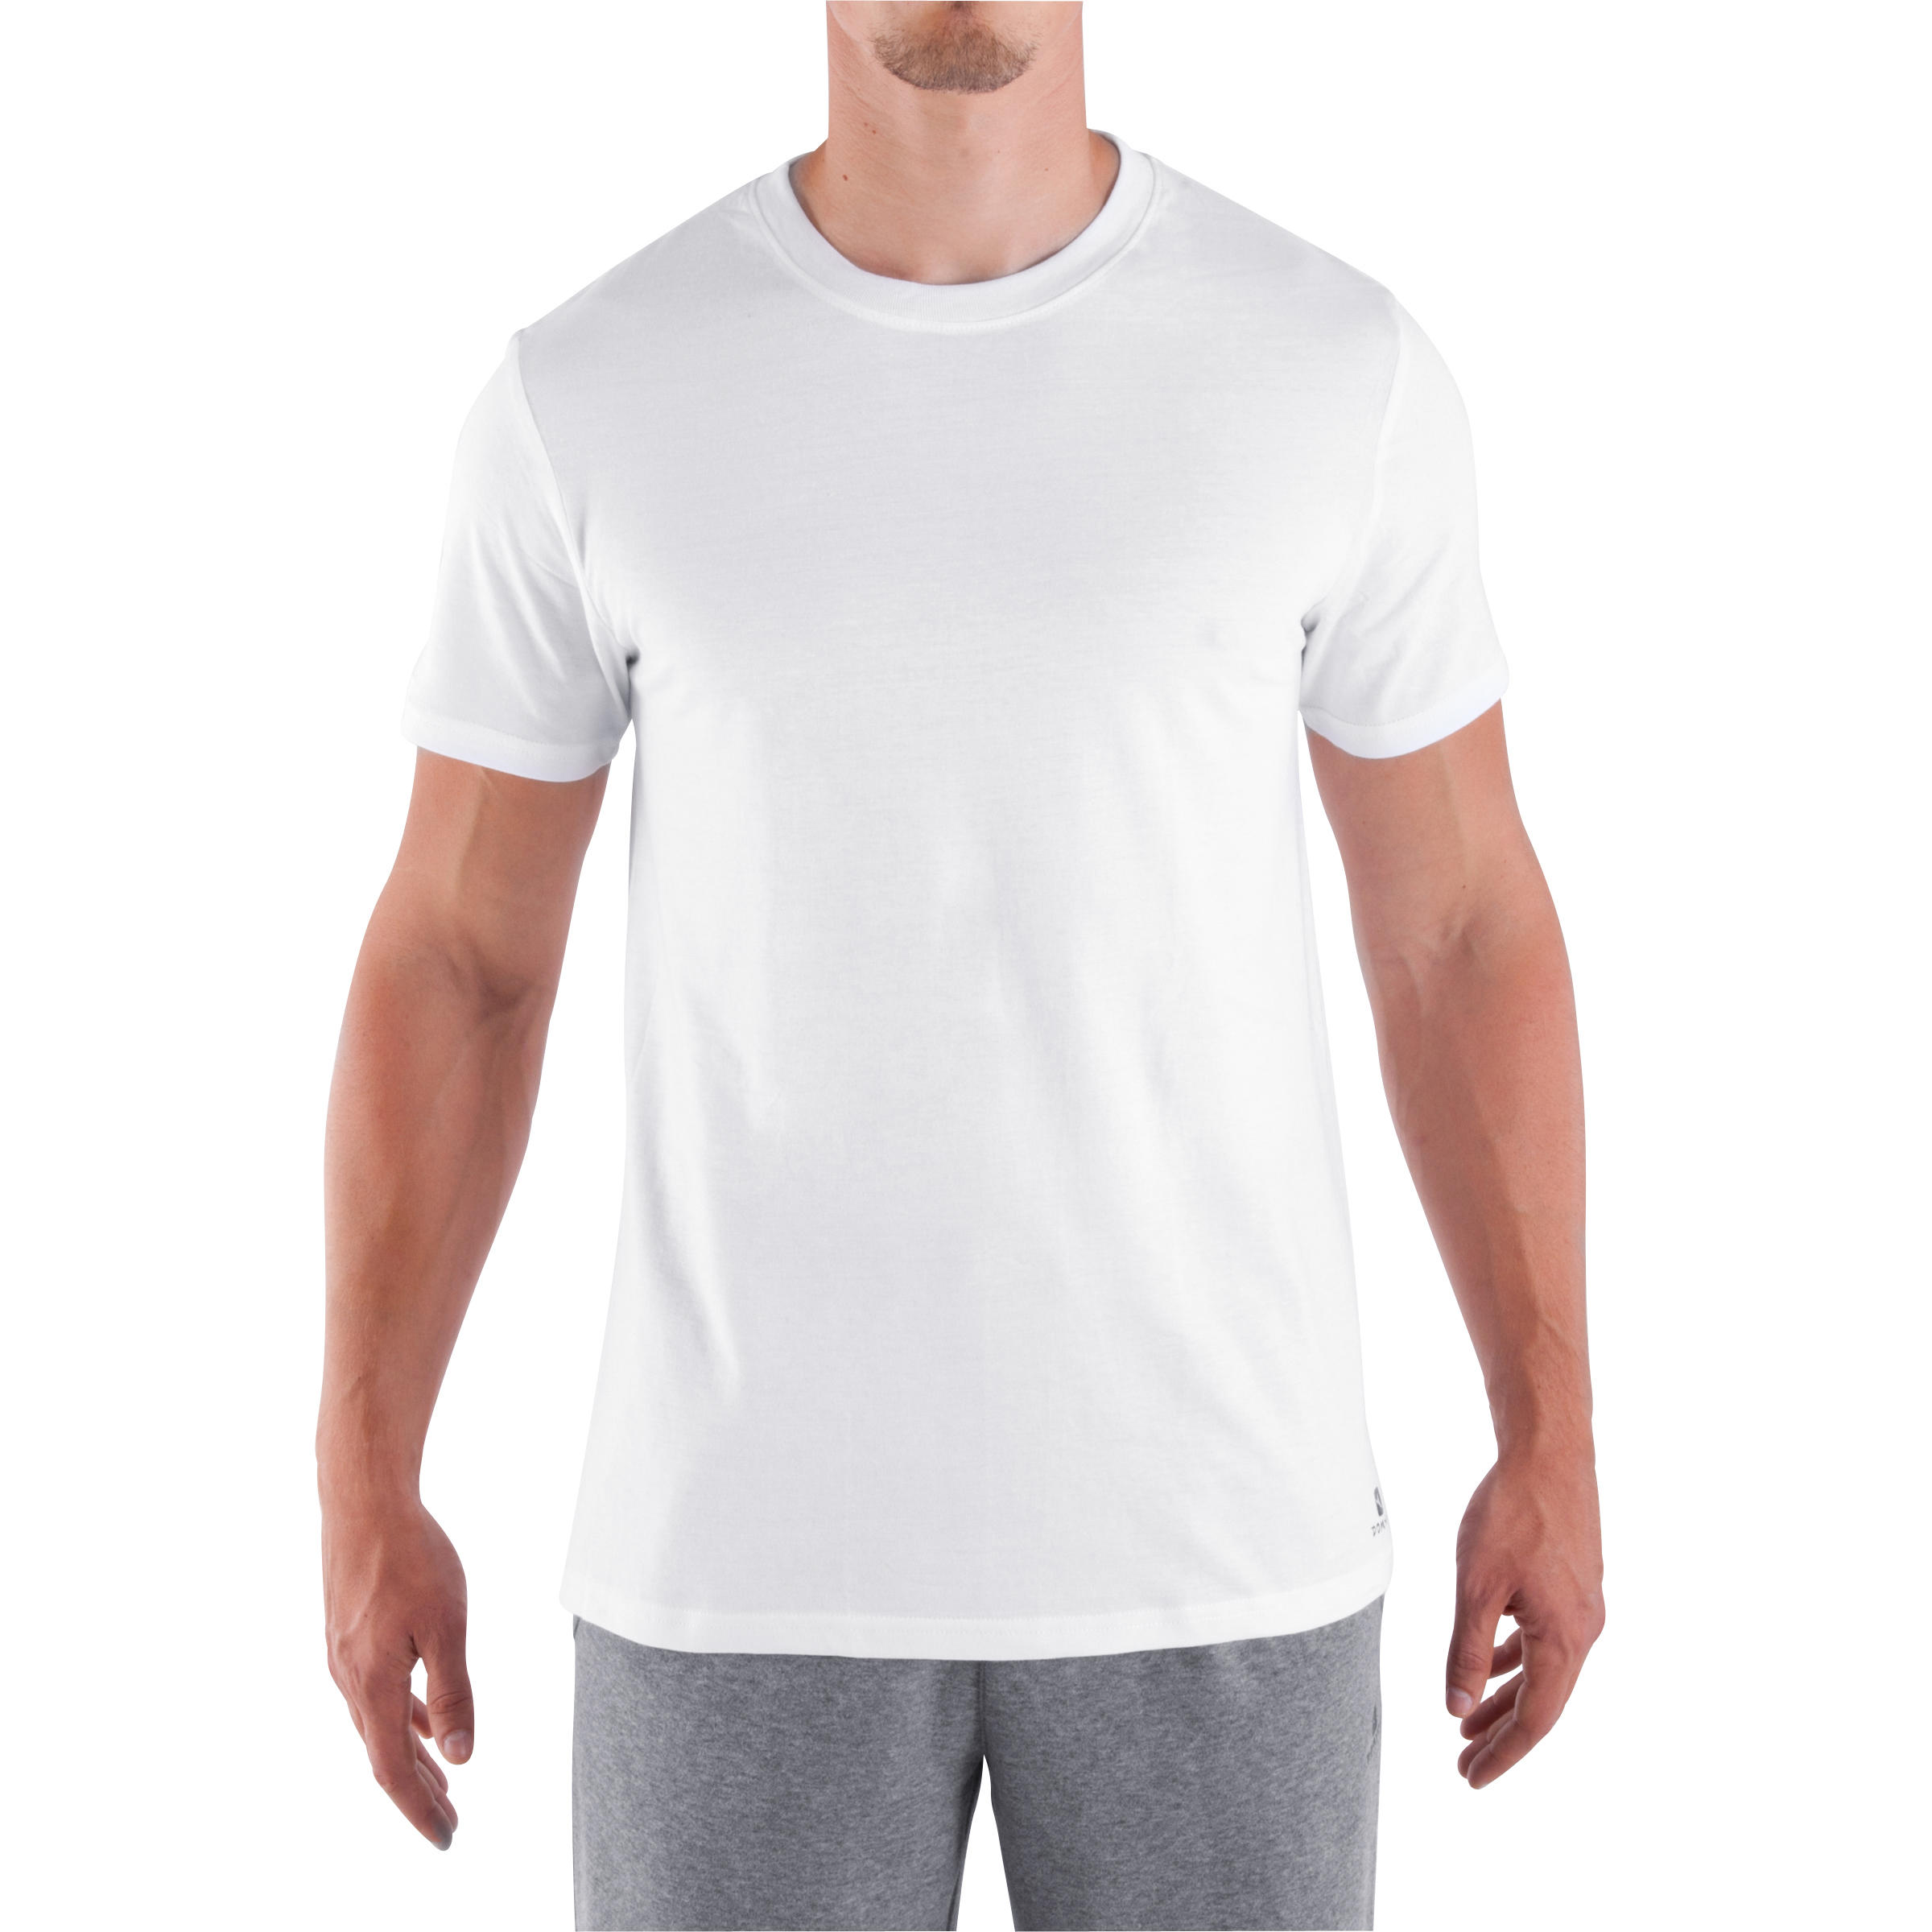 decathlon 99 t shirt